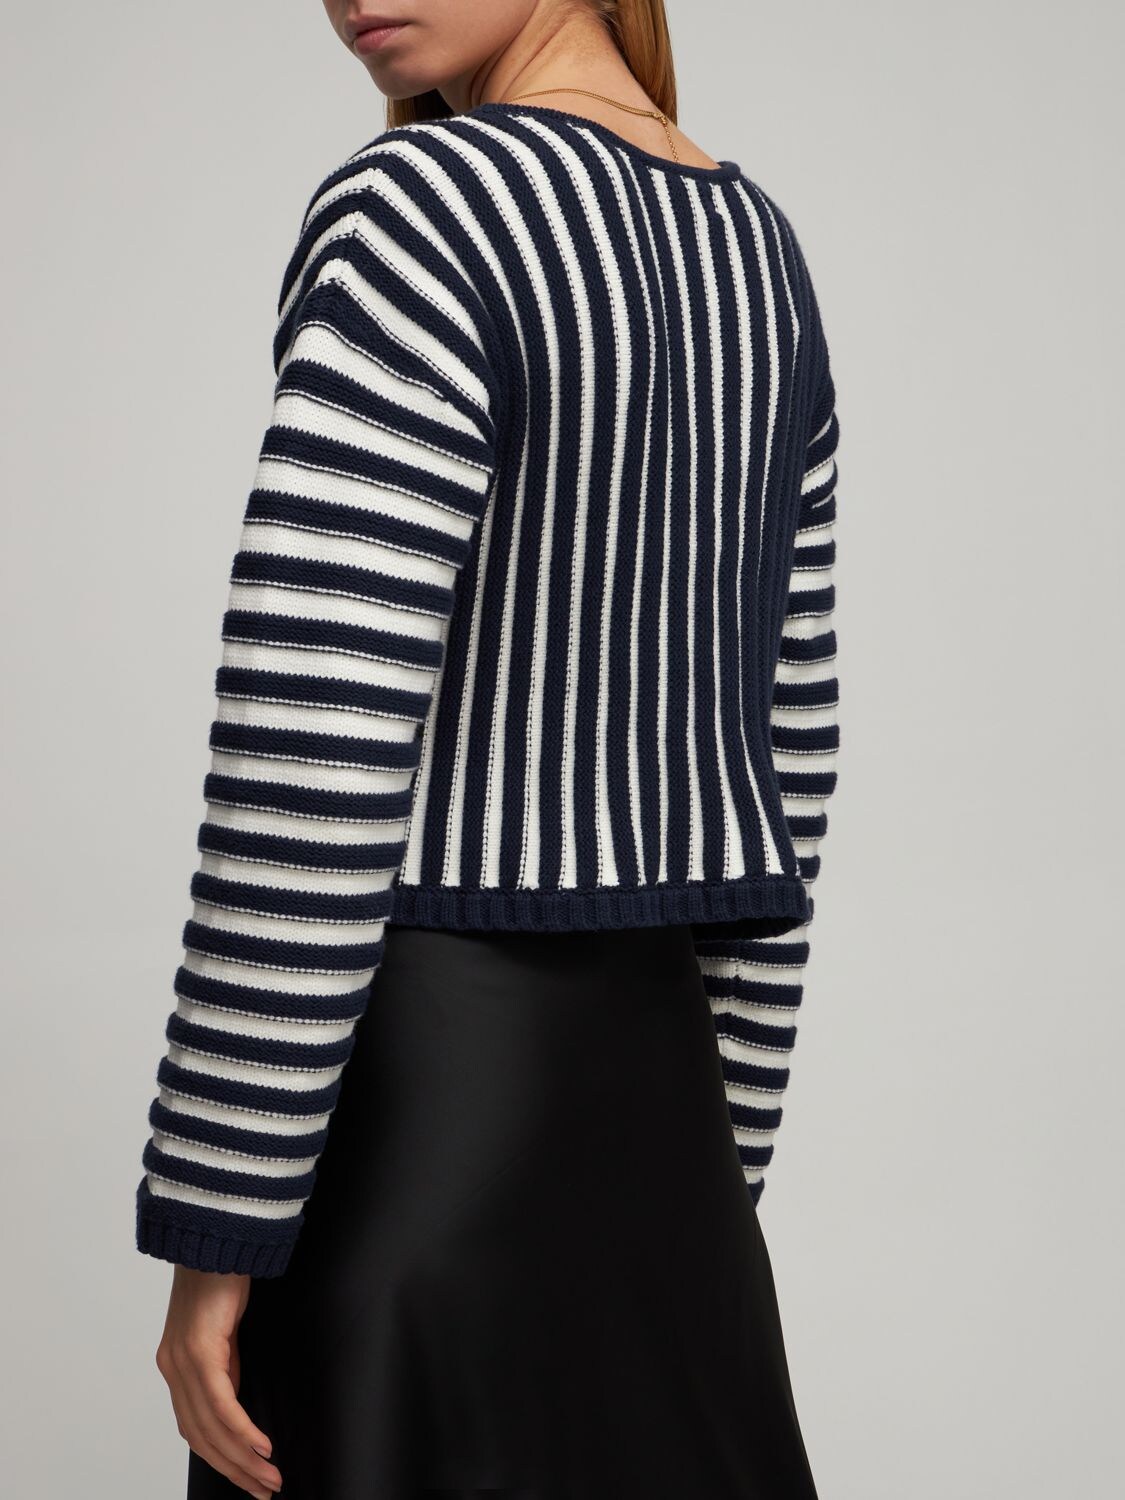 Musier Paris Cali Cotton Blend Sweater In Navy,ivory | ModeSens